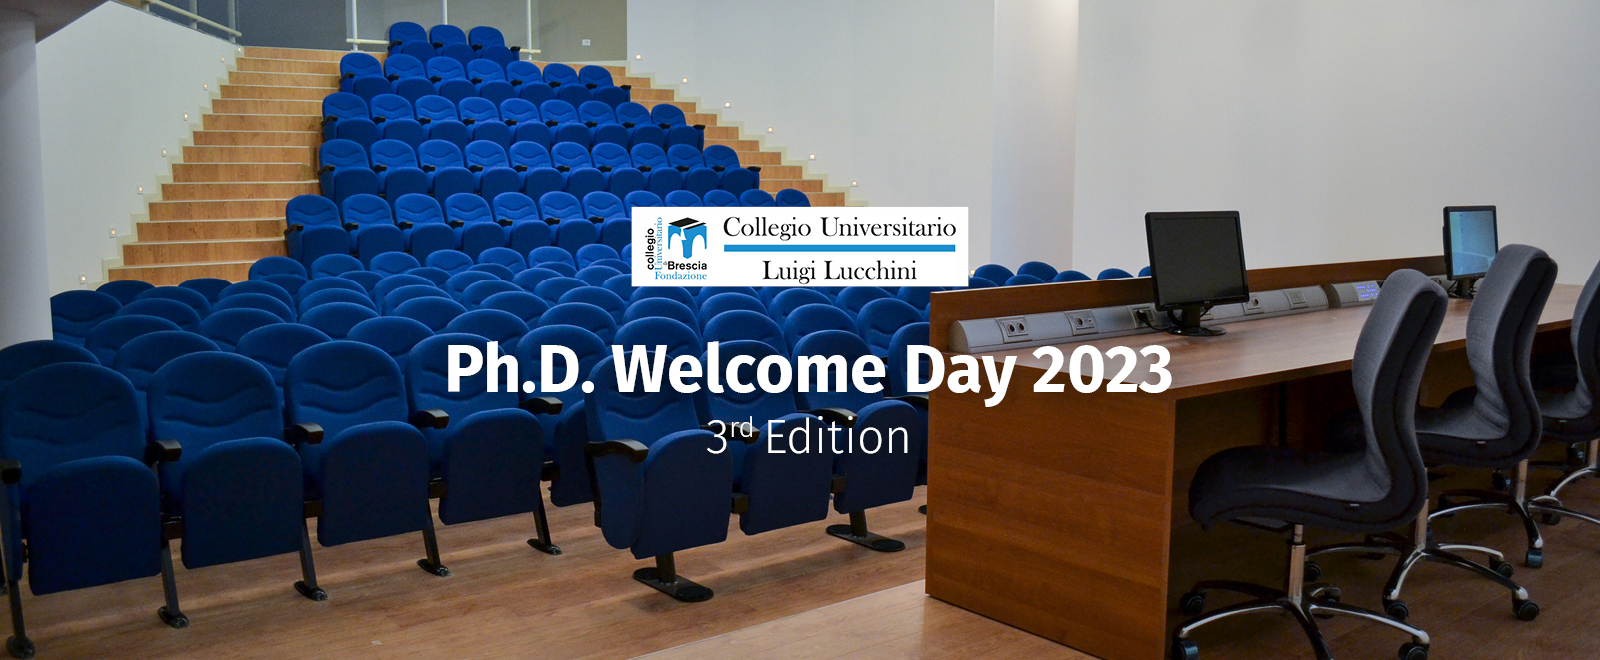 Ph.D. Welcome Day 2023, 3rd edition. Collegio Universitario Luigi Lucchini